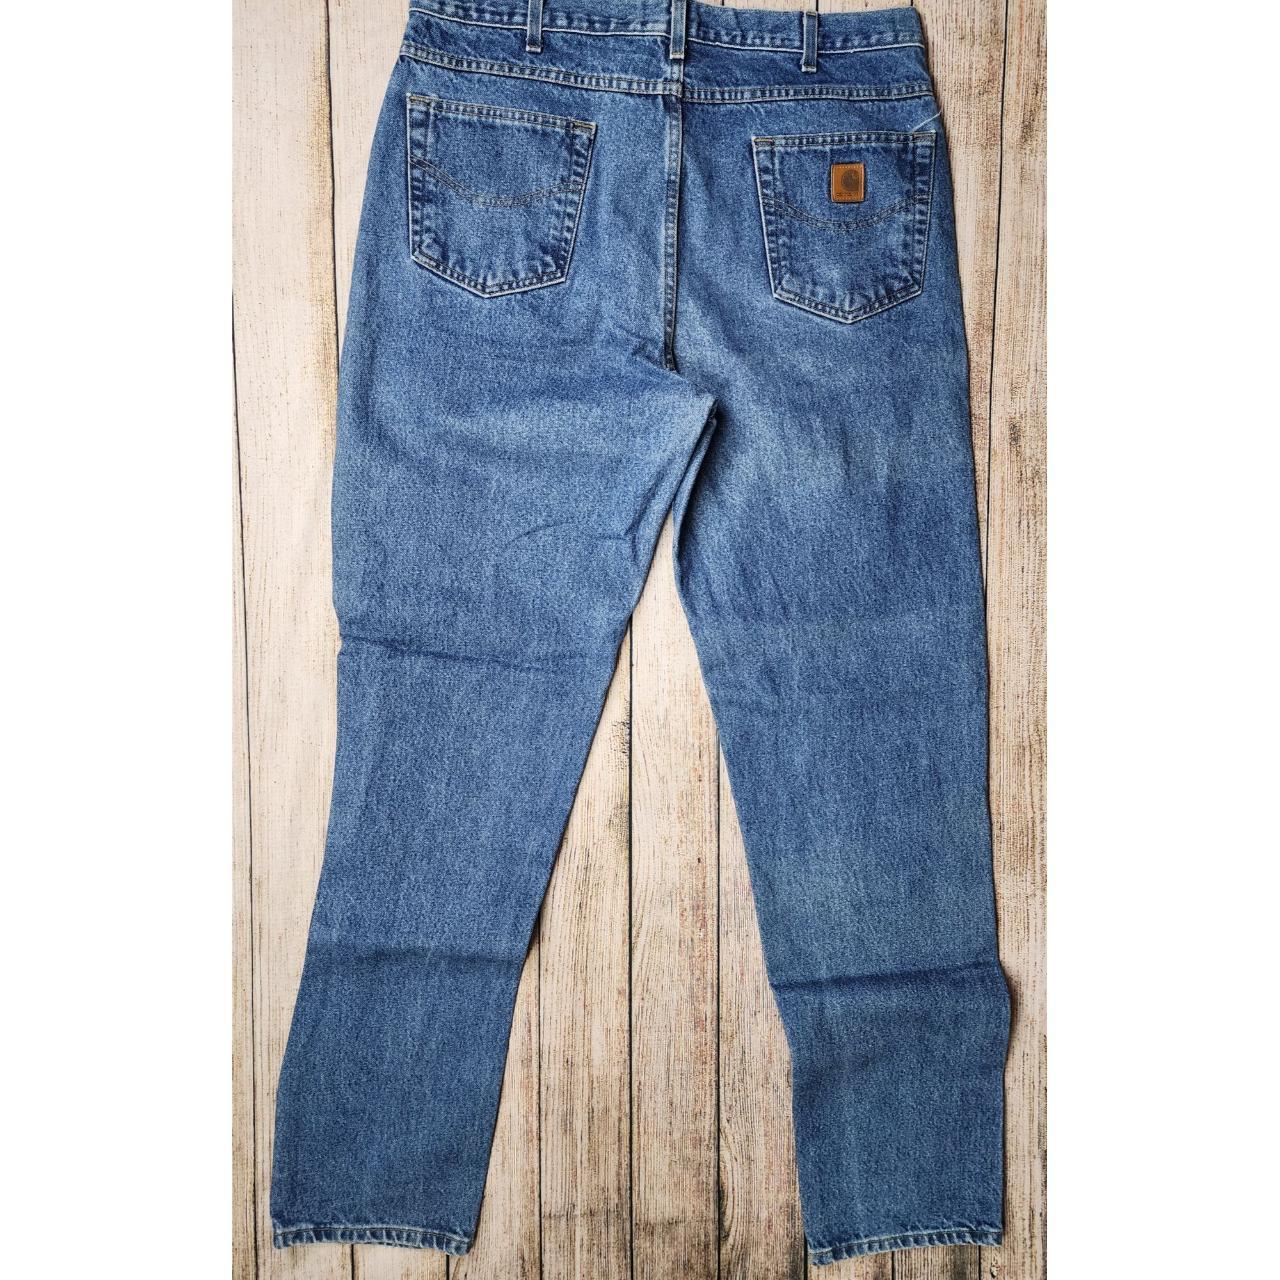 Carhartt Jeans B17 Relaxed fit 100%... - Depop